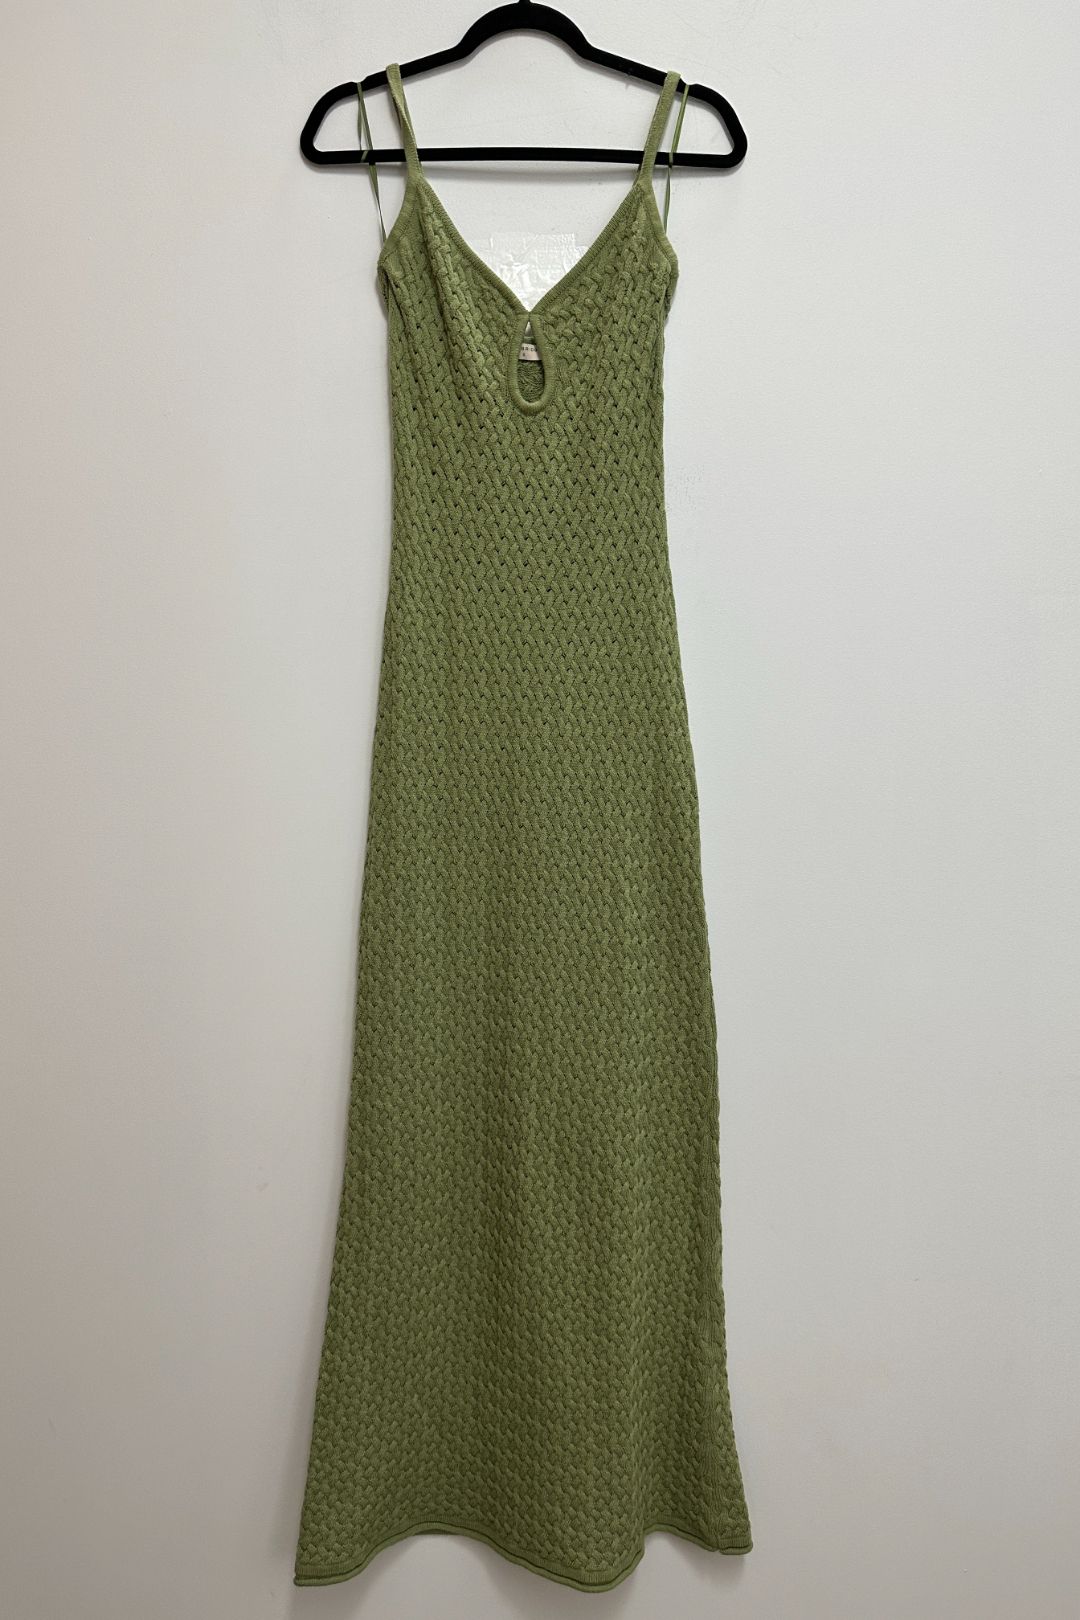 Effie Knit Key Maxi Dress in Sage